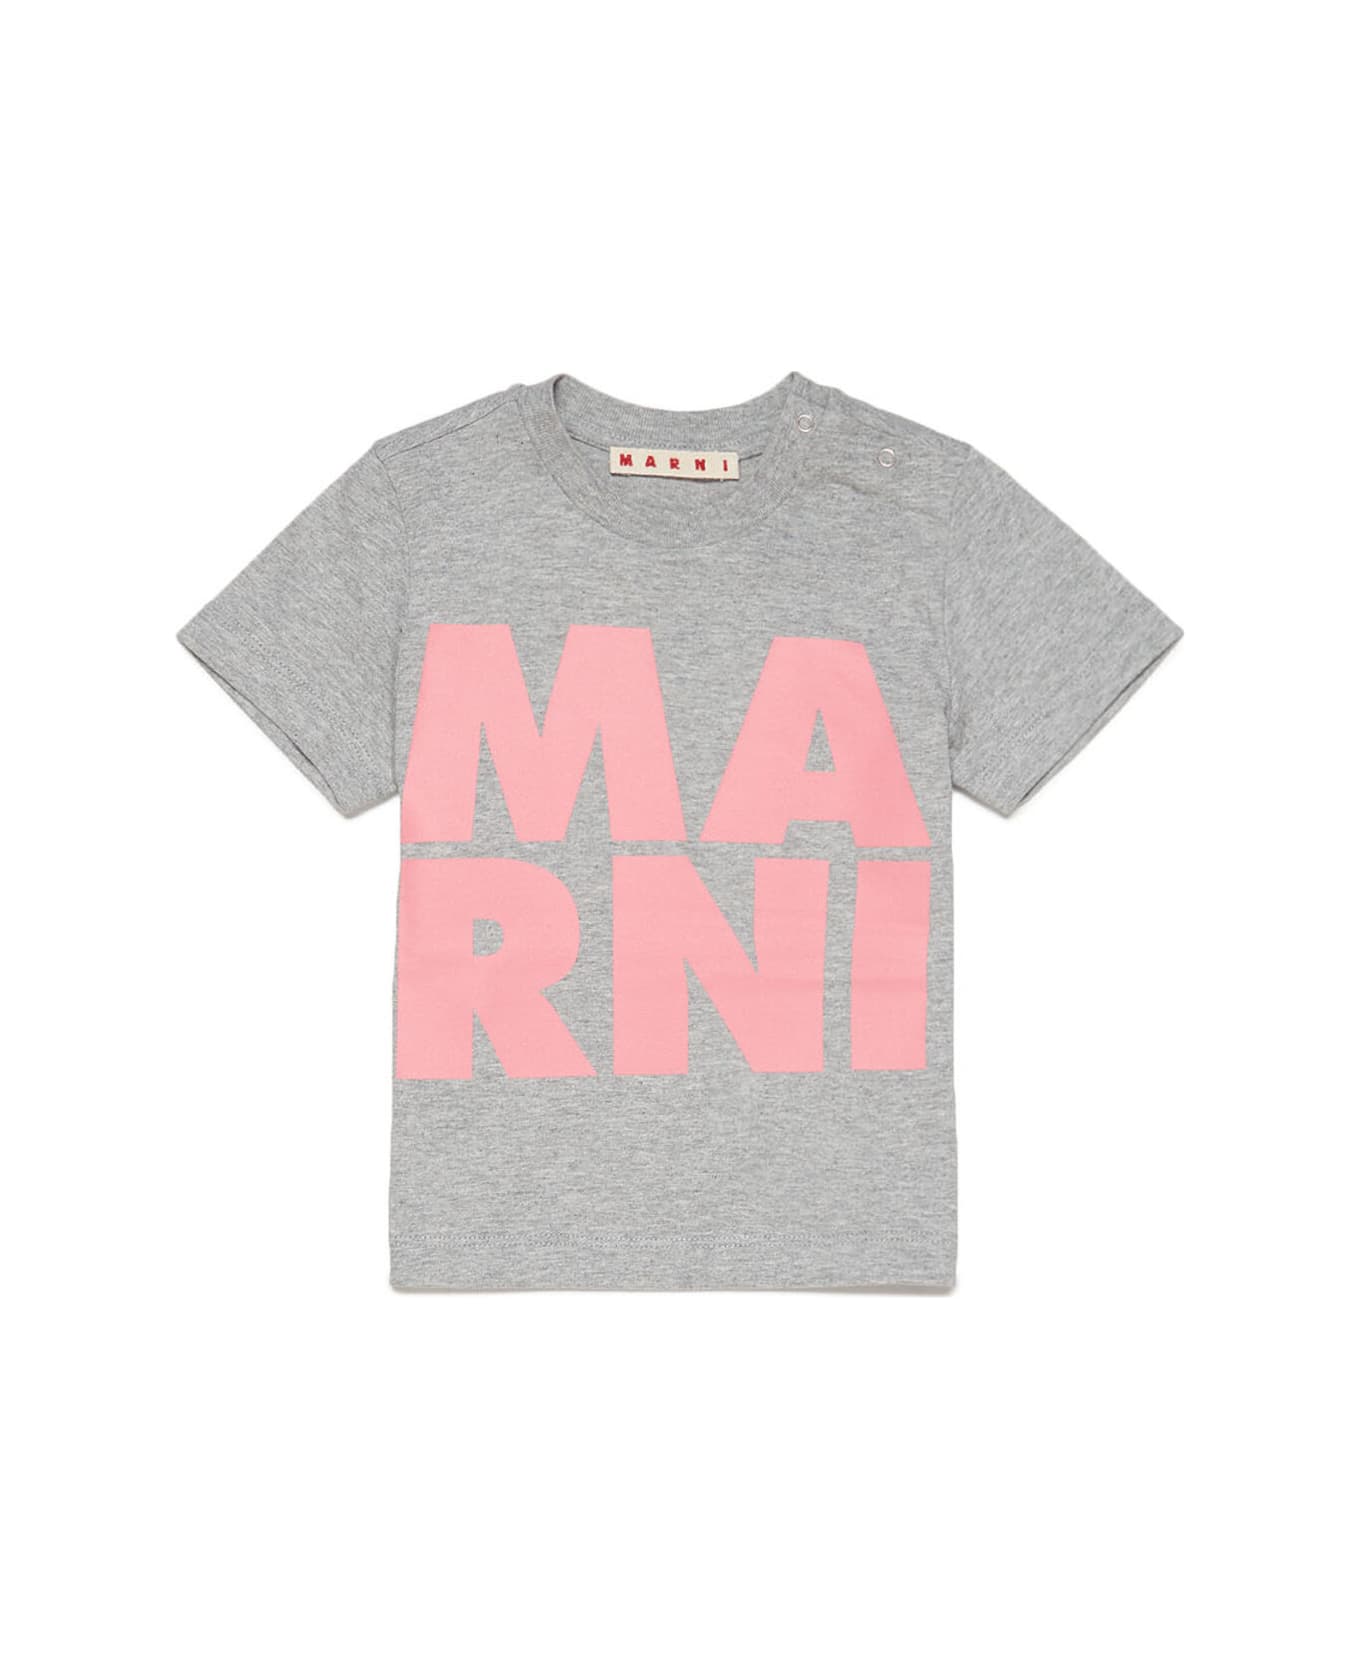 Marni Mt60b T-shirt Marni Grey Jersey T-shirt With Marni Displaced Logo - Inox gray melange